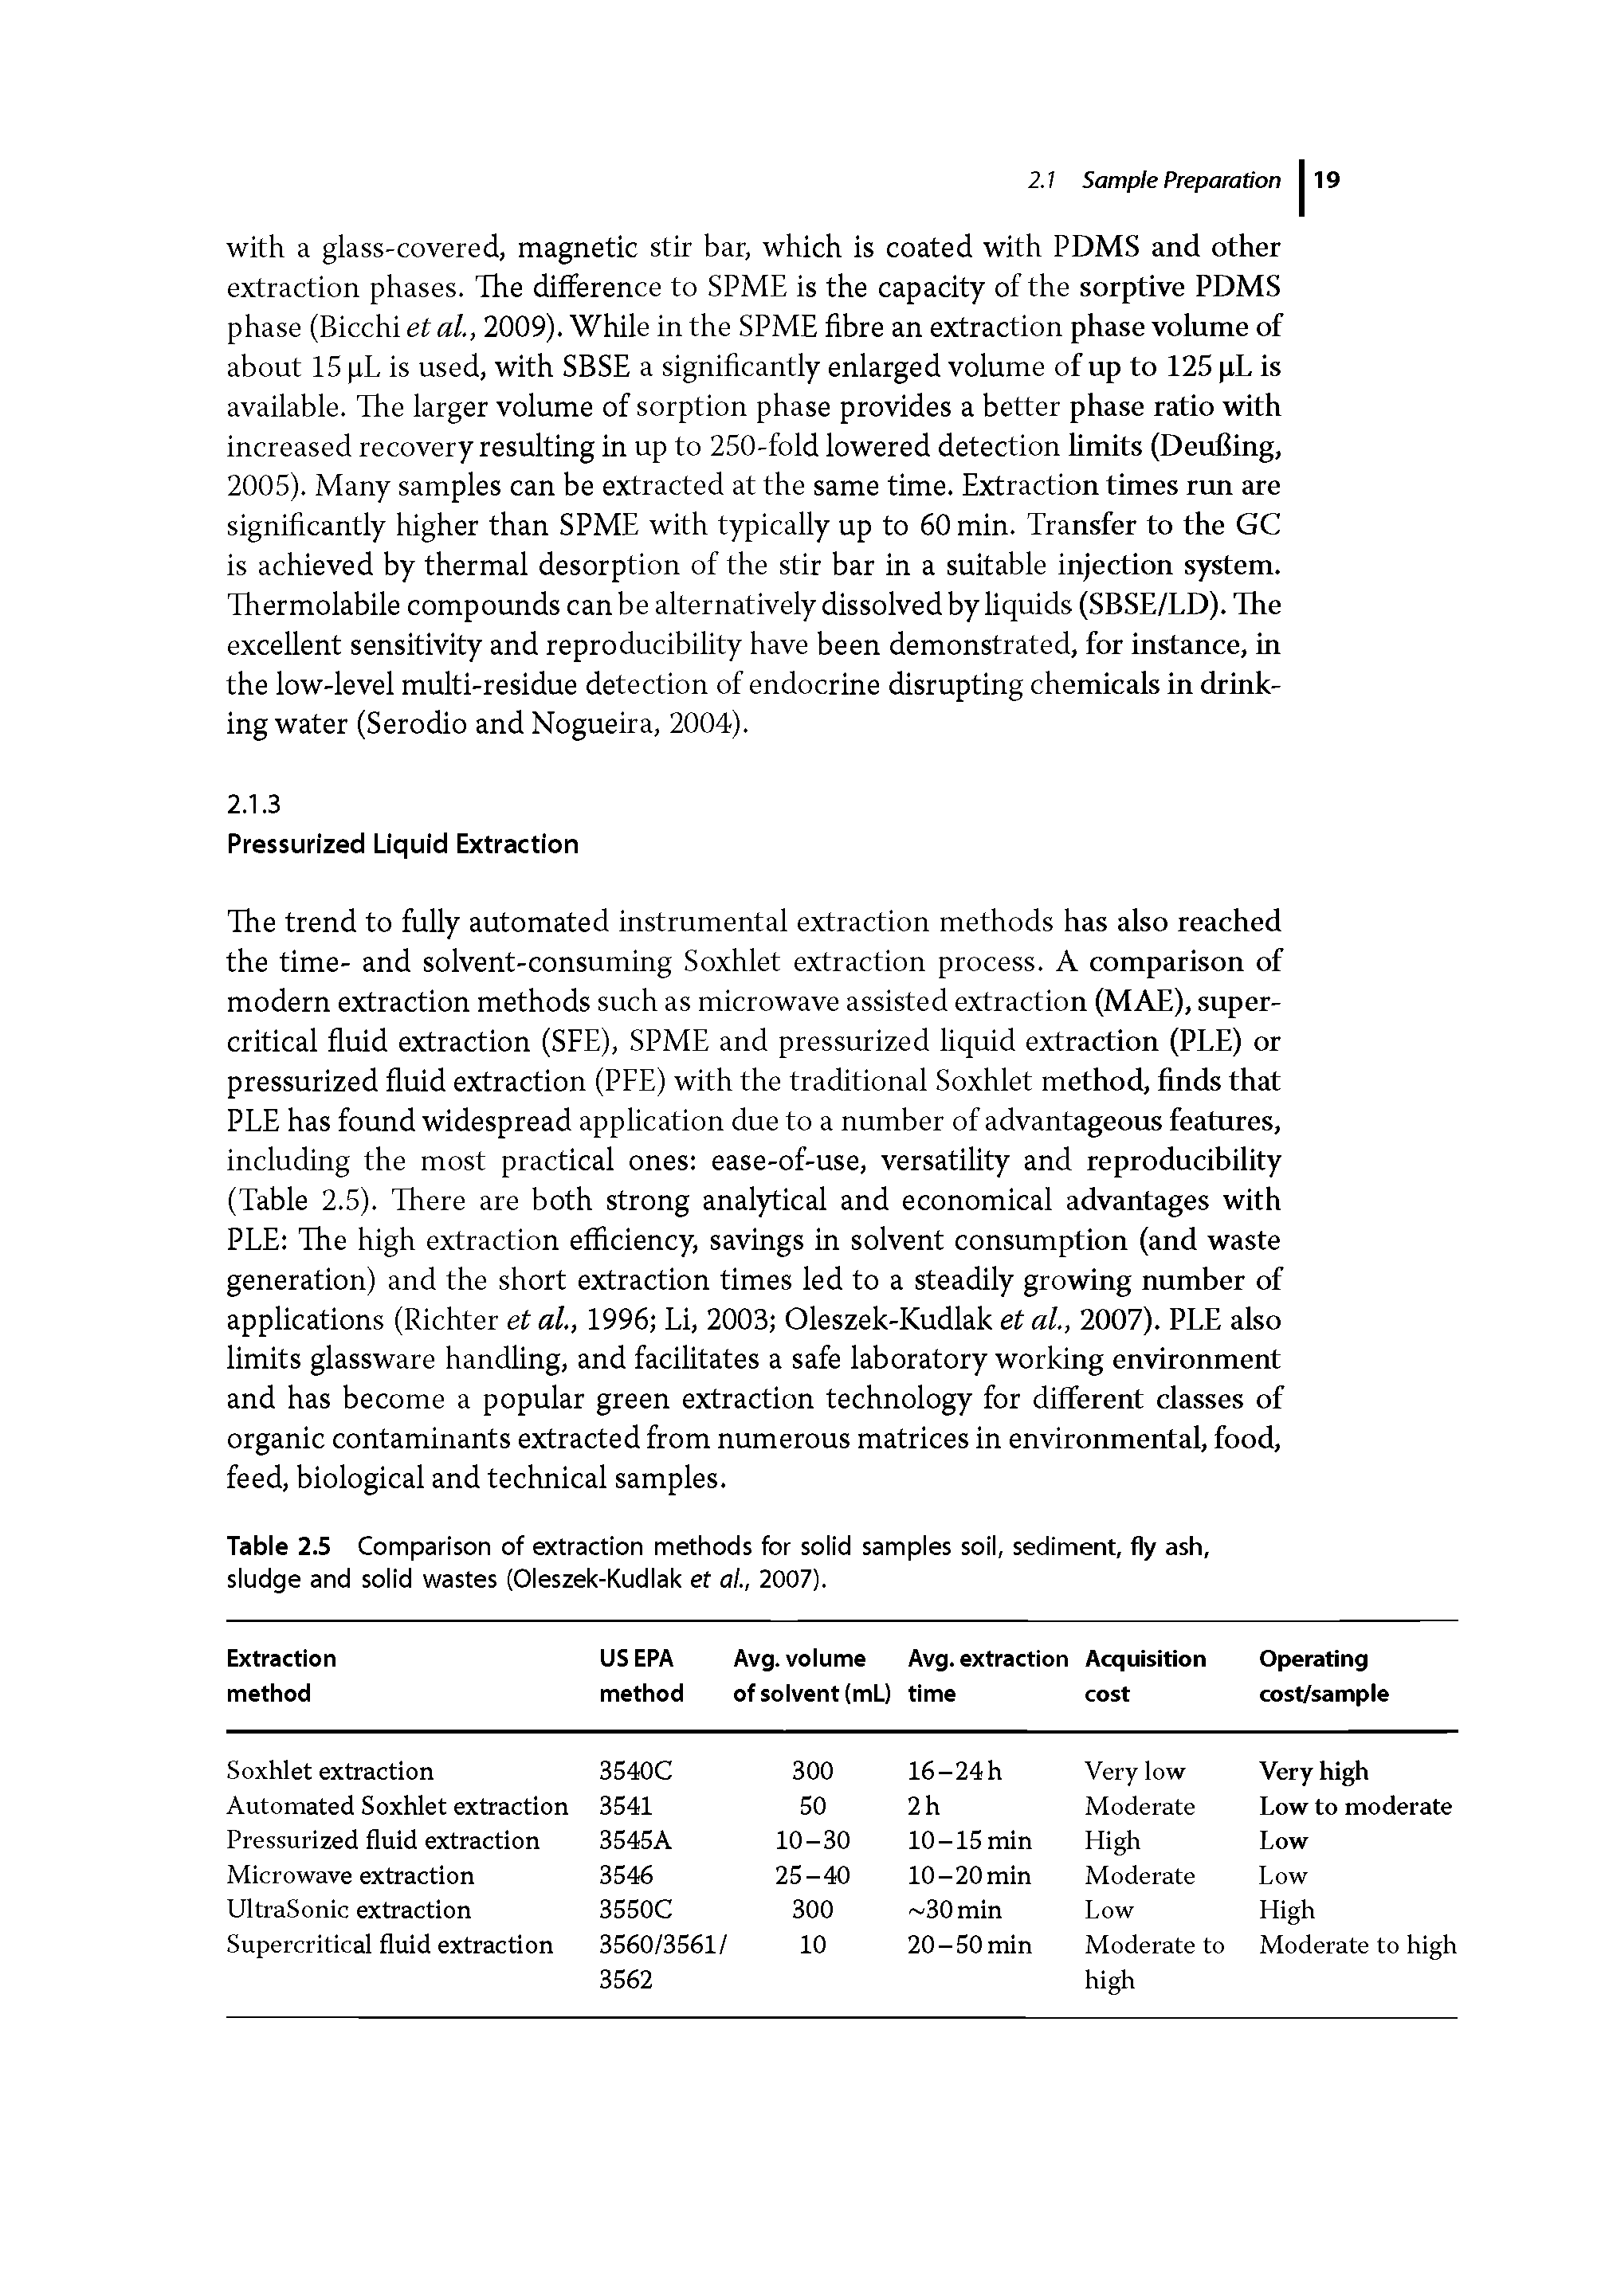 Table 2.5 Comparison of extraction methods for solid samples soil, sediment, fly ash, sludge and solid wastes (Oleszek-Kudlak ef al., 2007).